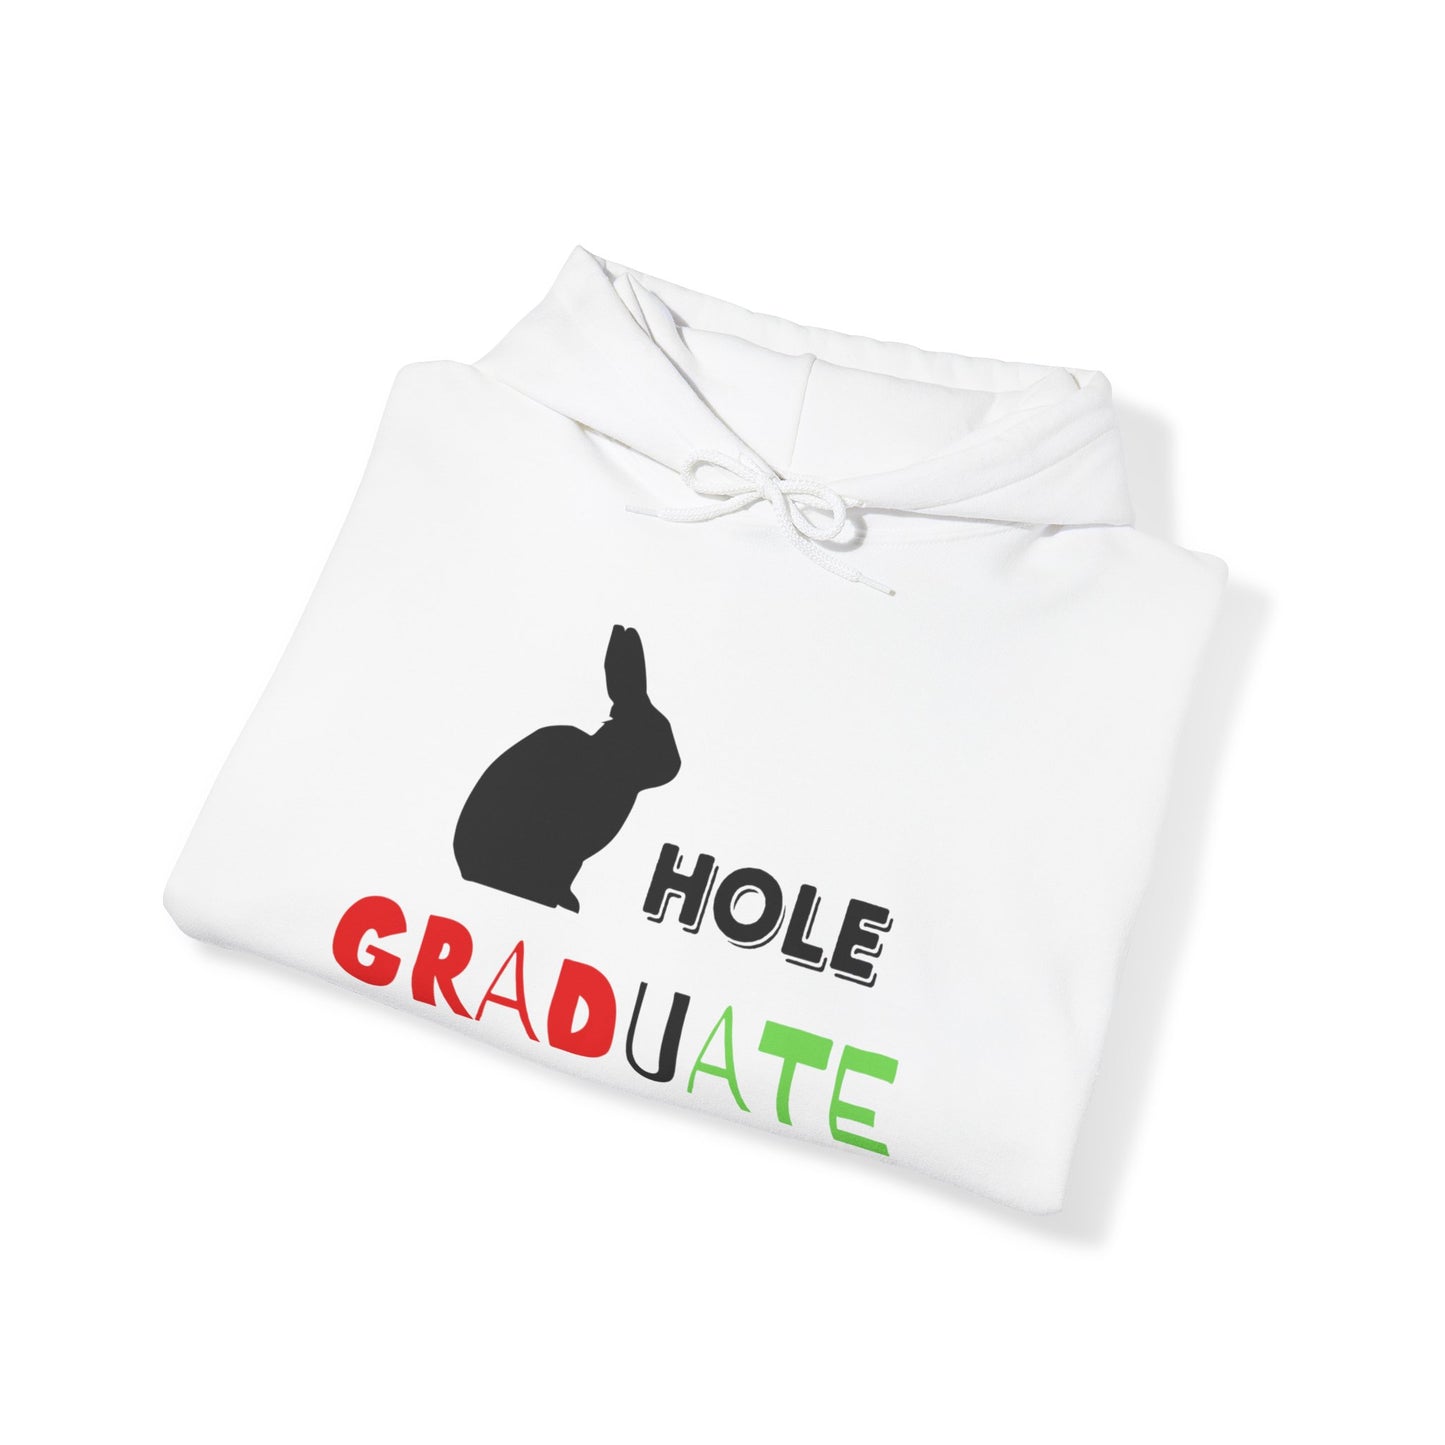 Rabbit Hole Graduate, Unisex Heavy Blend™ Hooded Sweatshirt